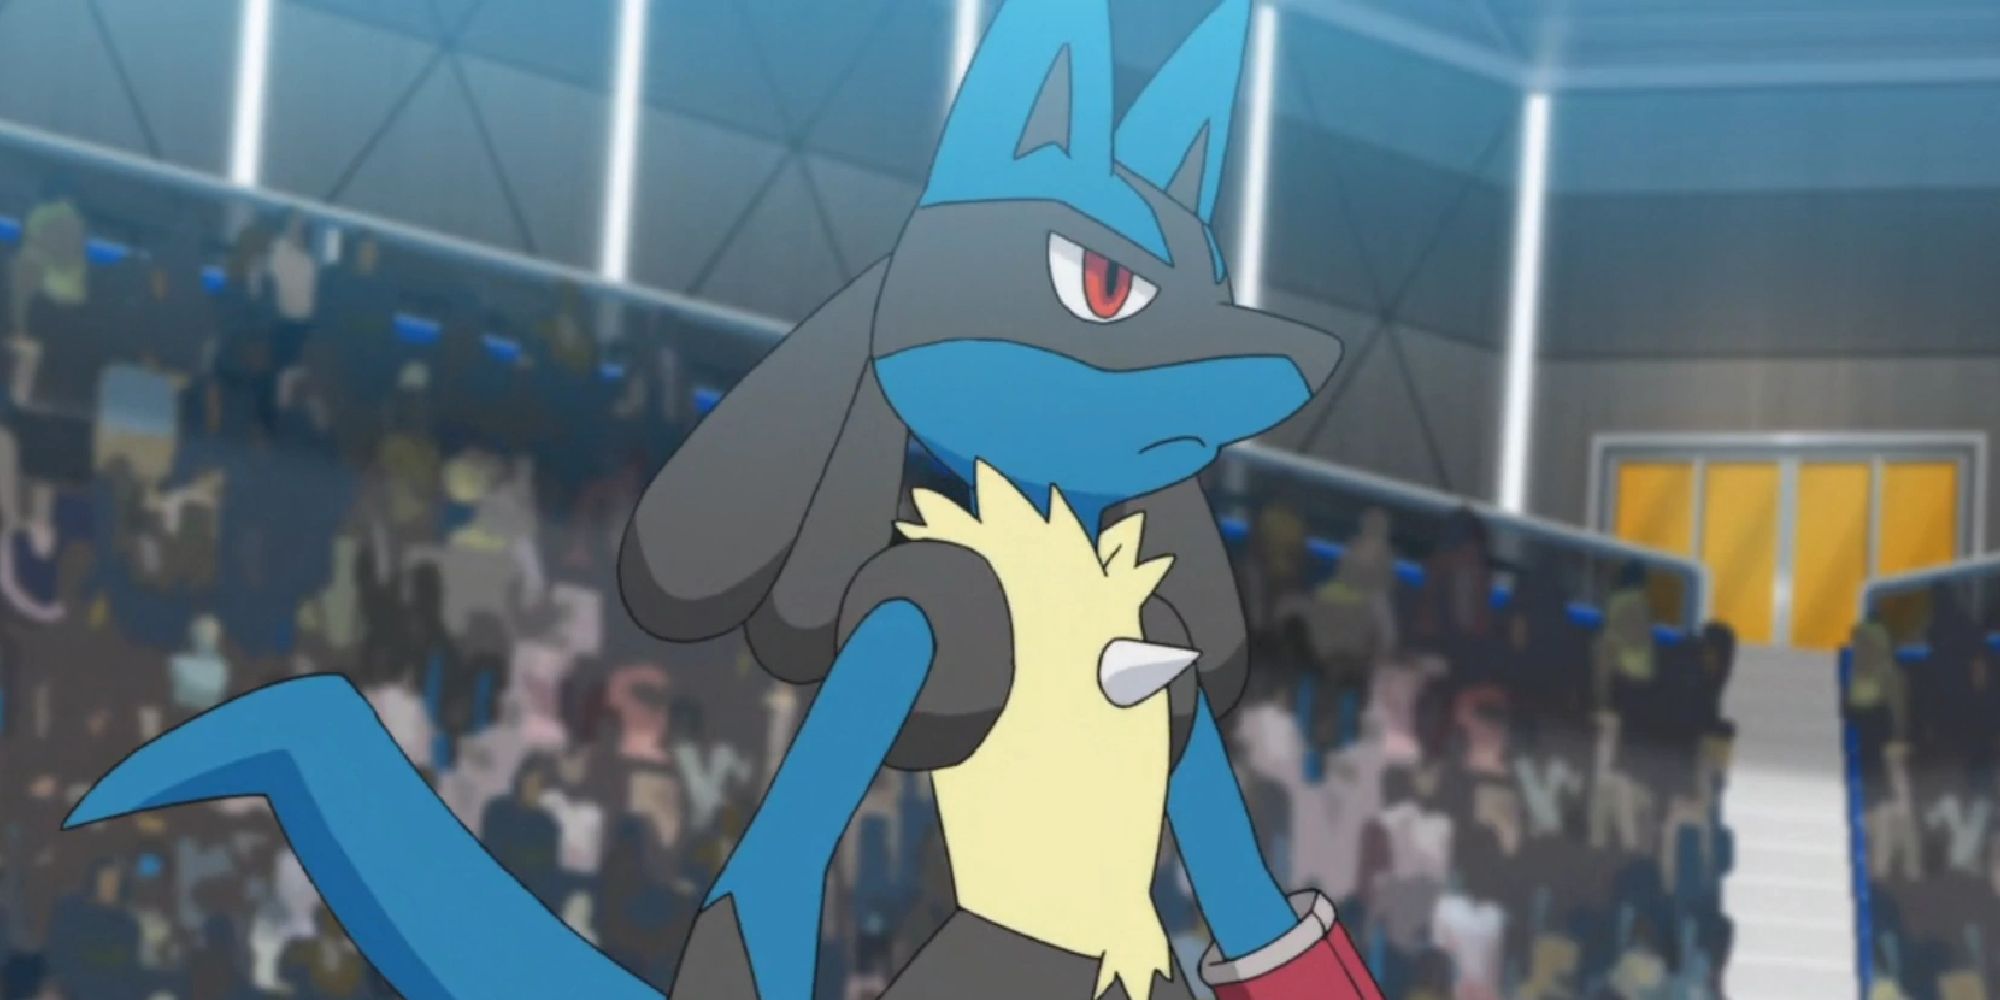 Lucario in a stadium in the Pokemon anime